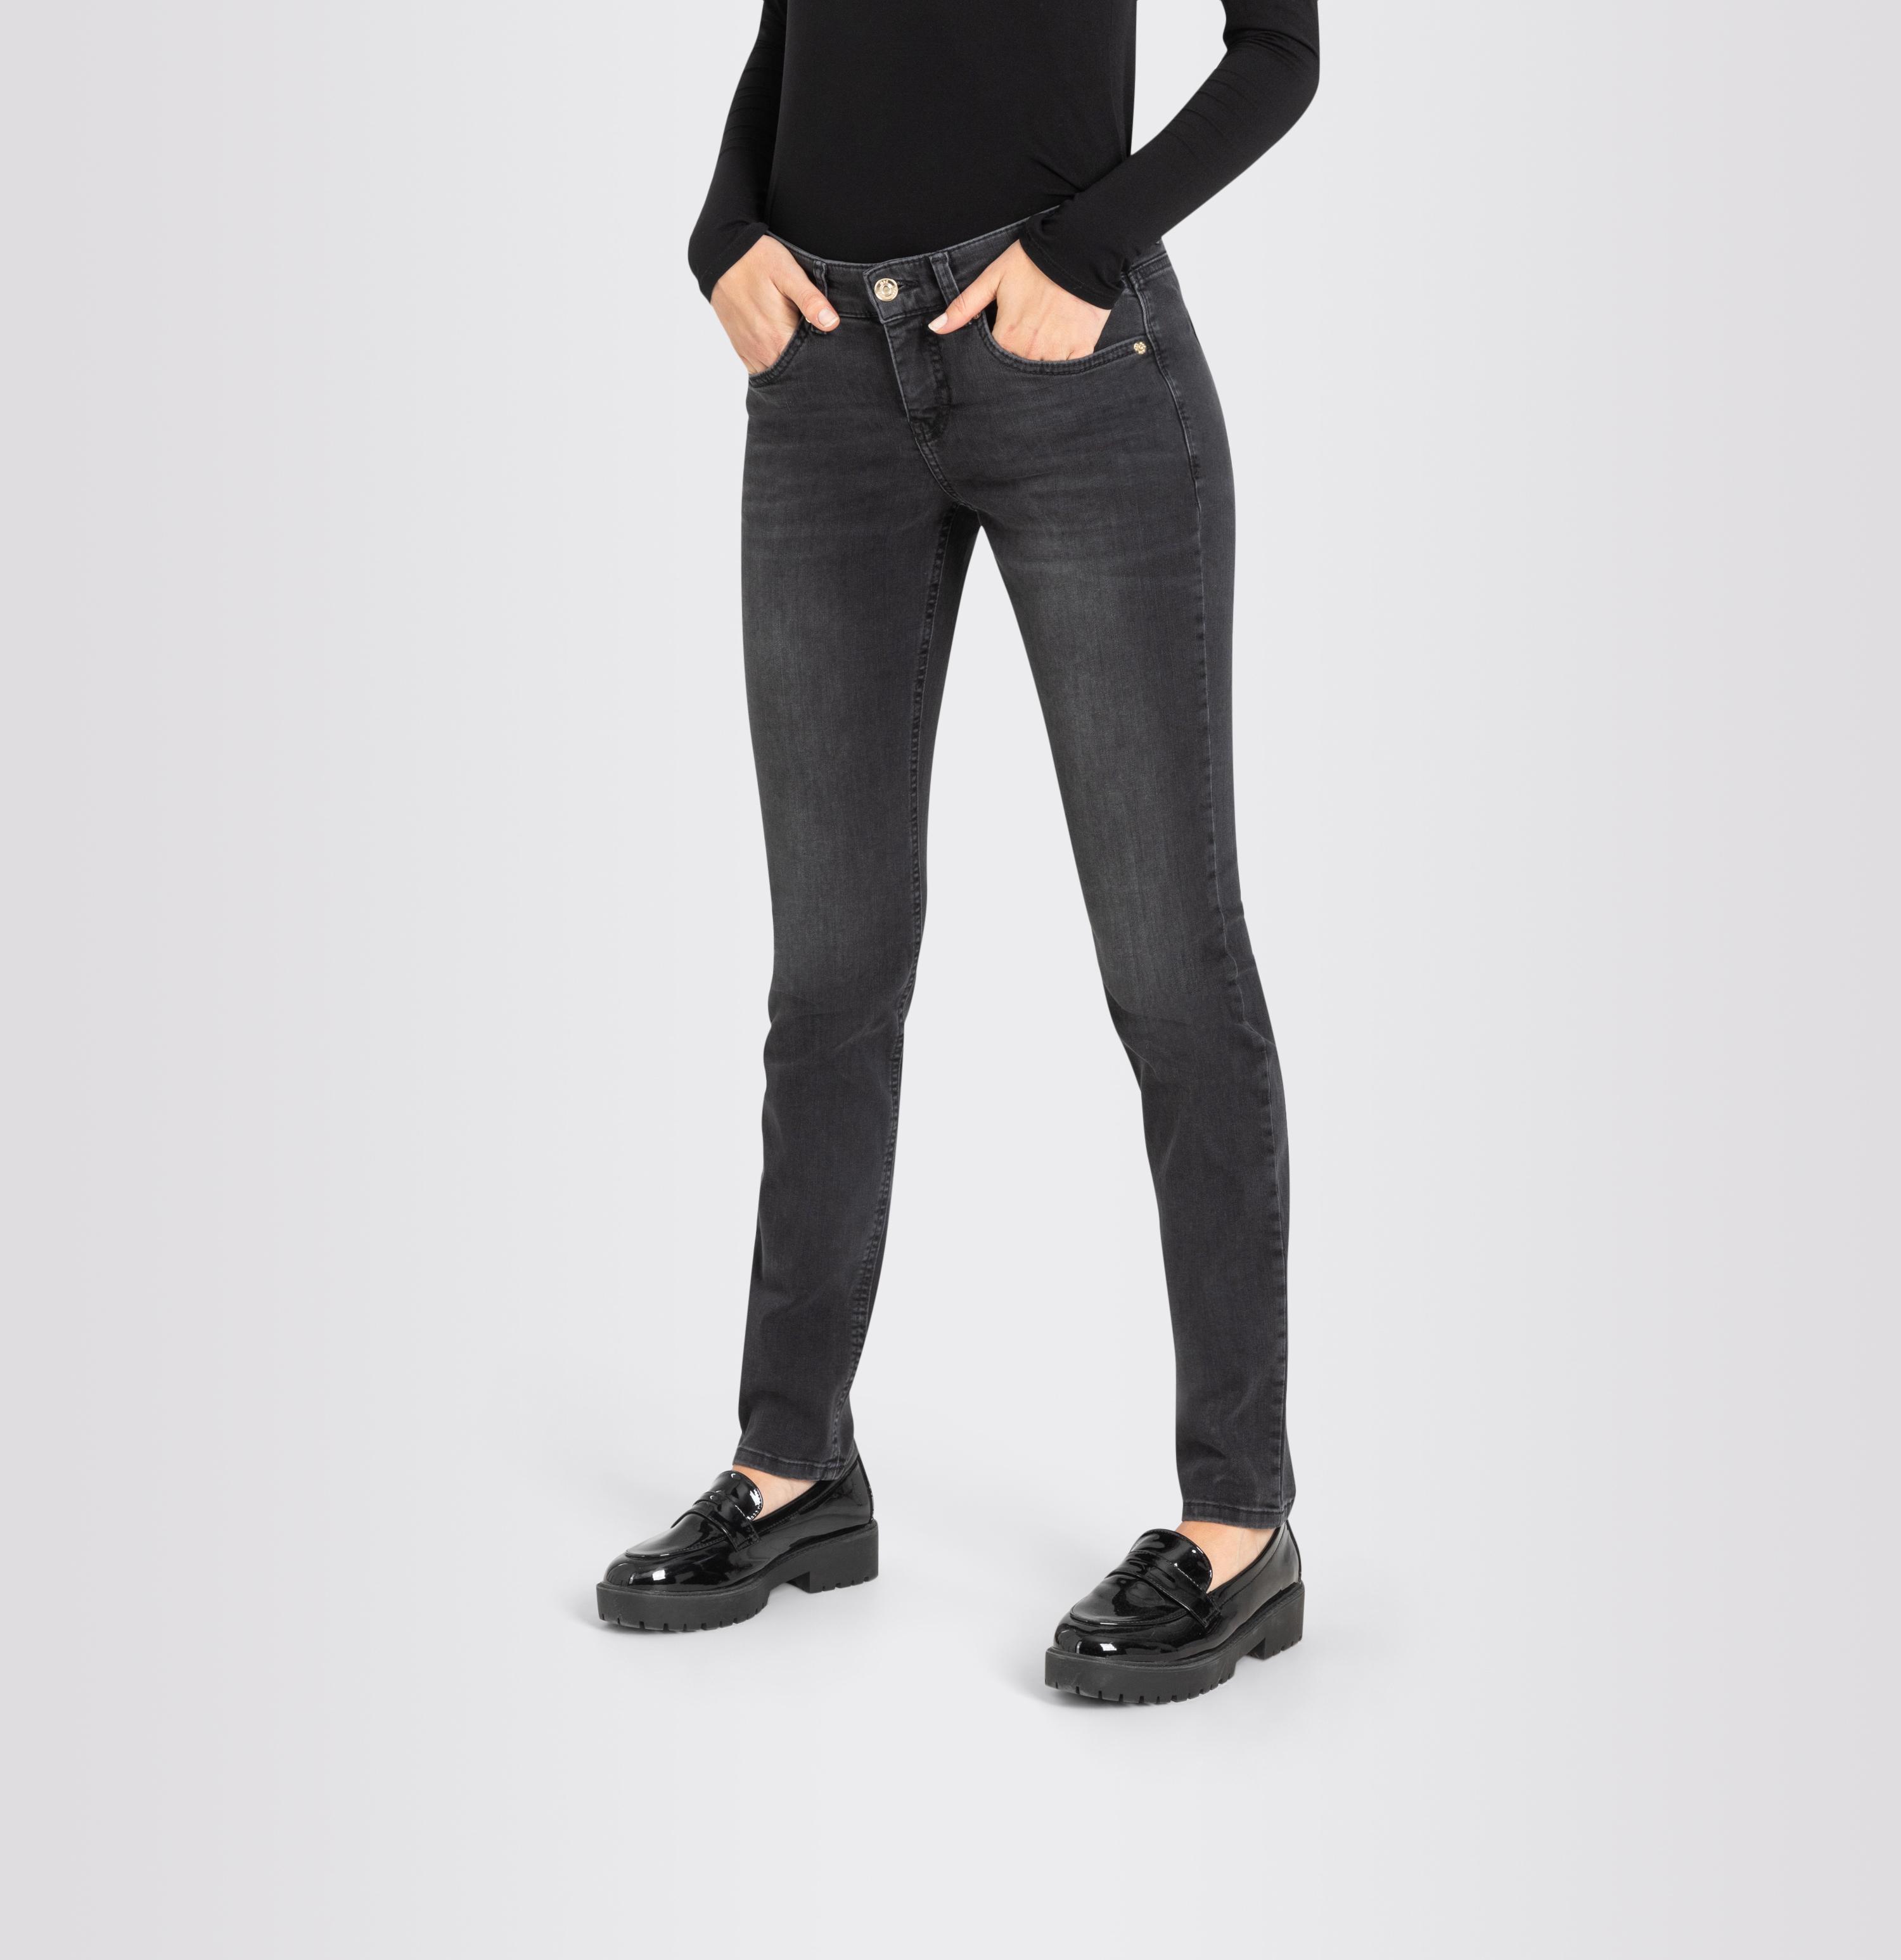 Pants, Shop - D933 Fit, Perfect grey Jeans Women | Slim, MAC IT